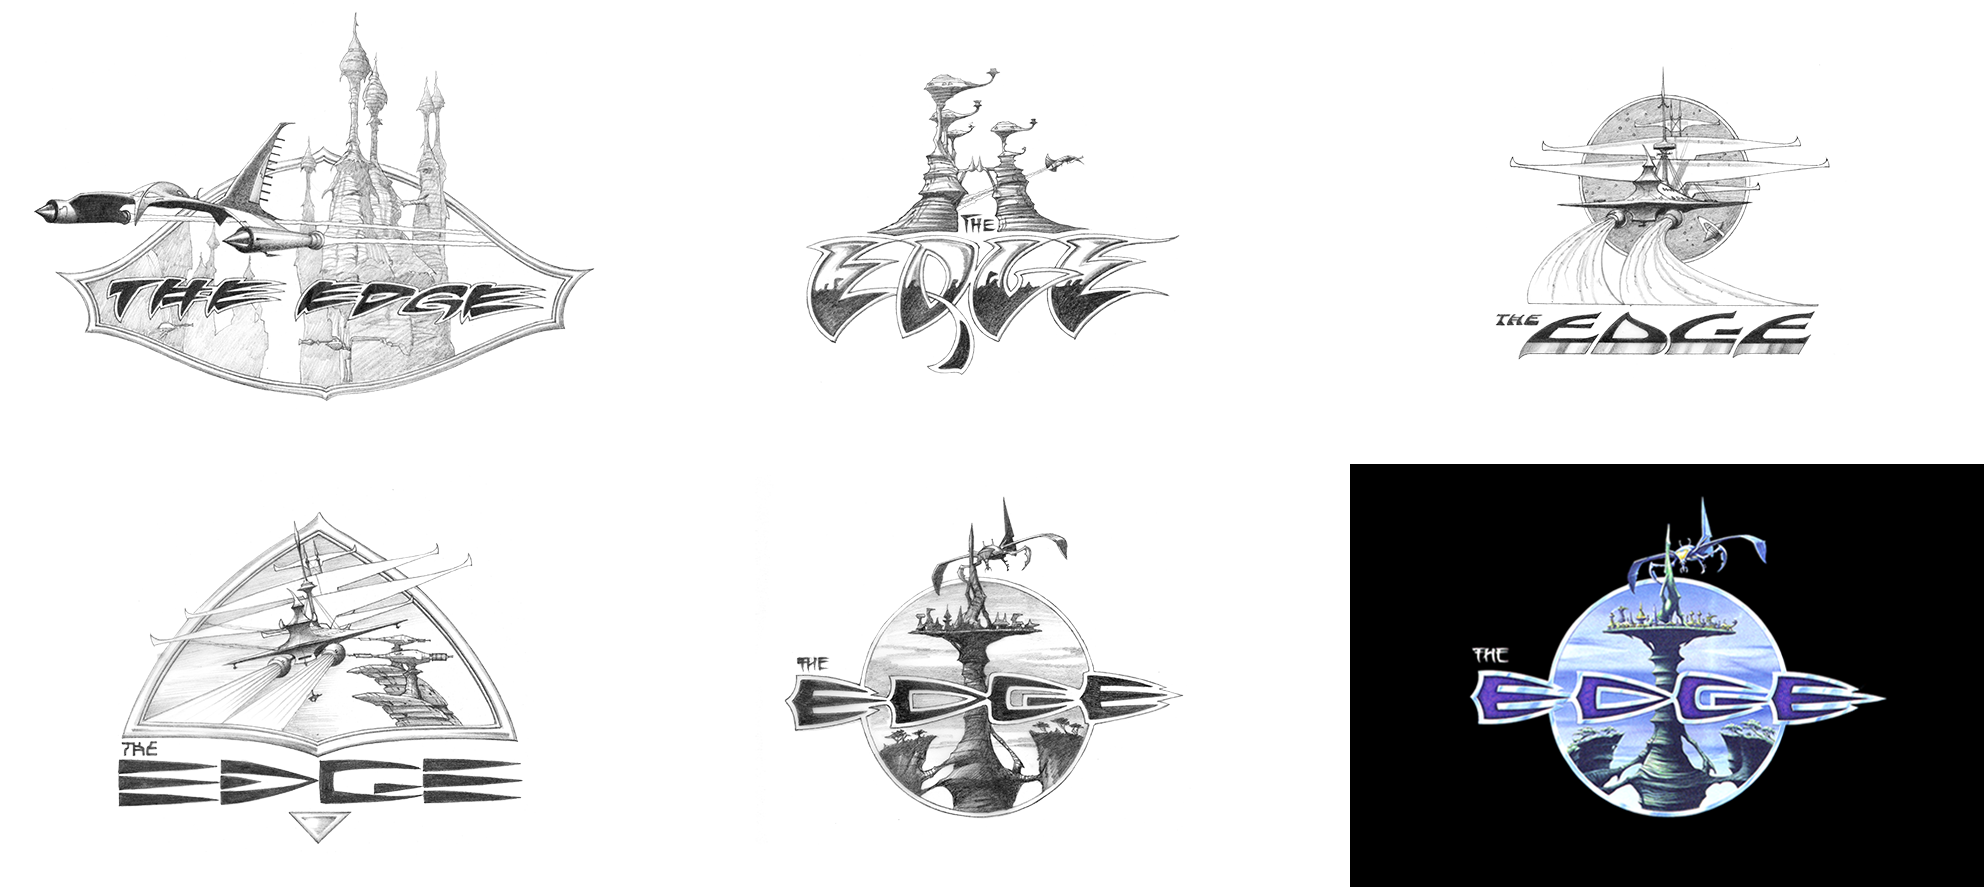 The Edge logo designs by Rodney Matthews